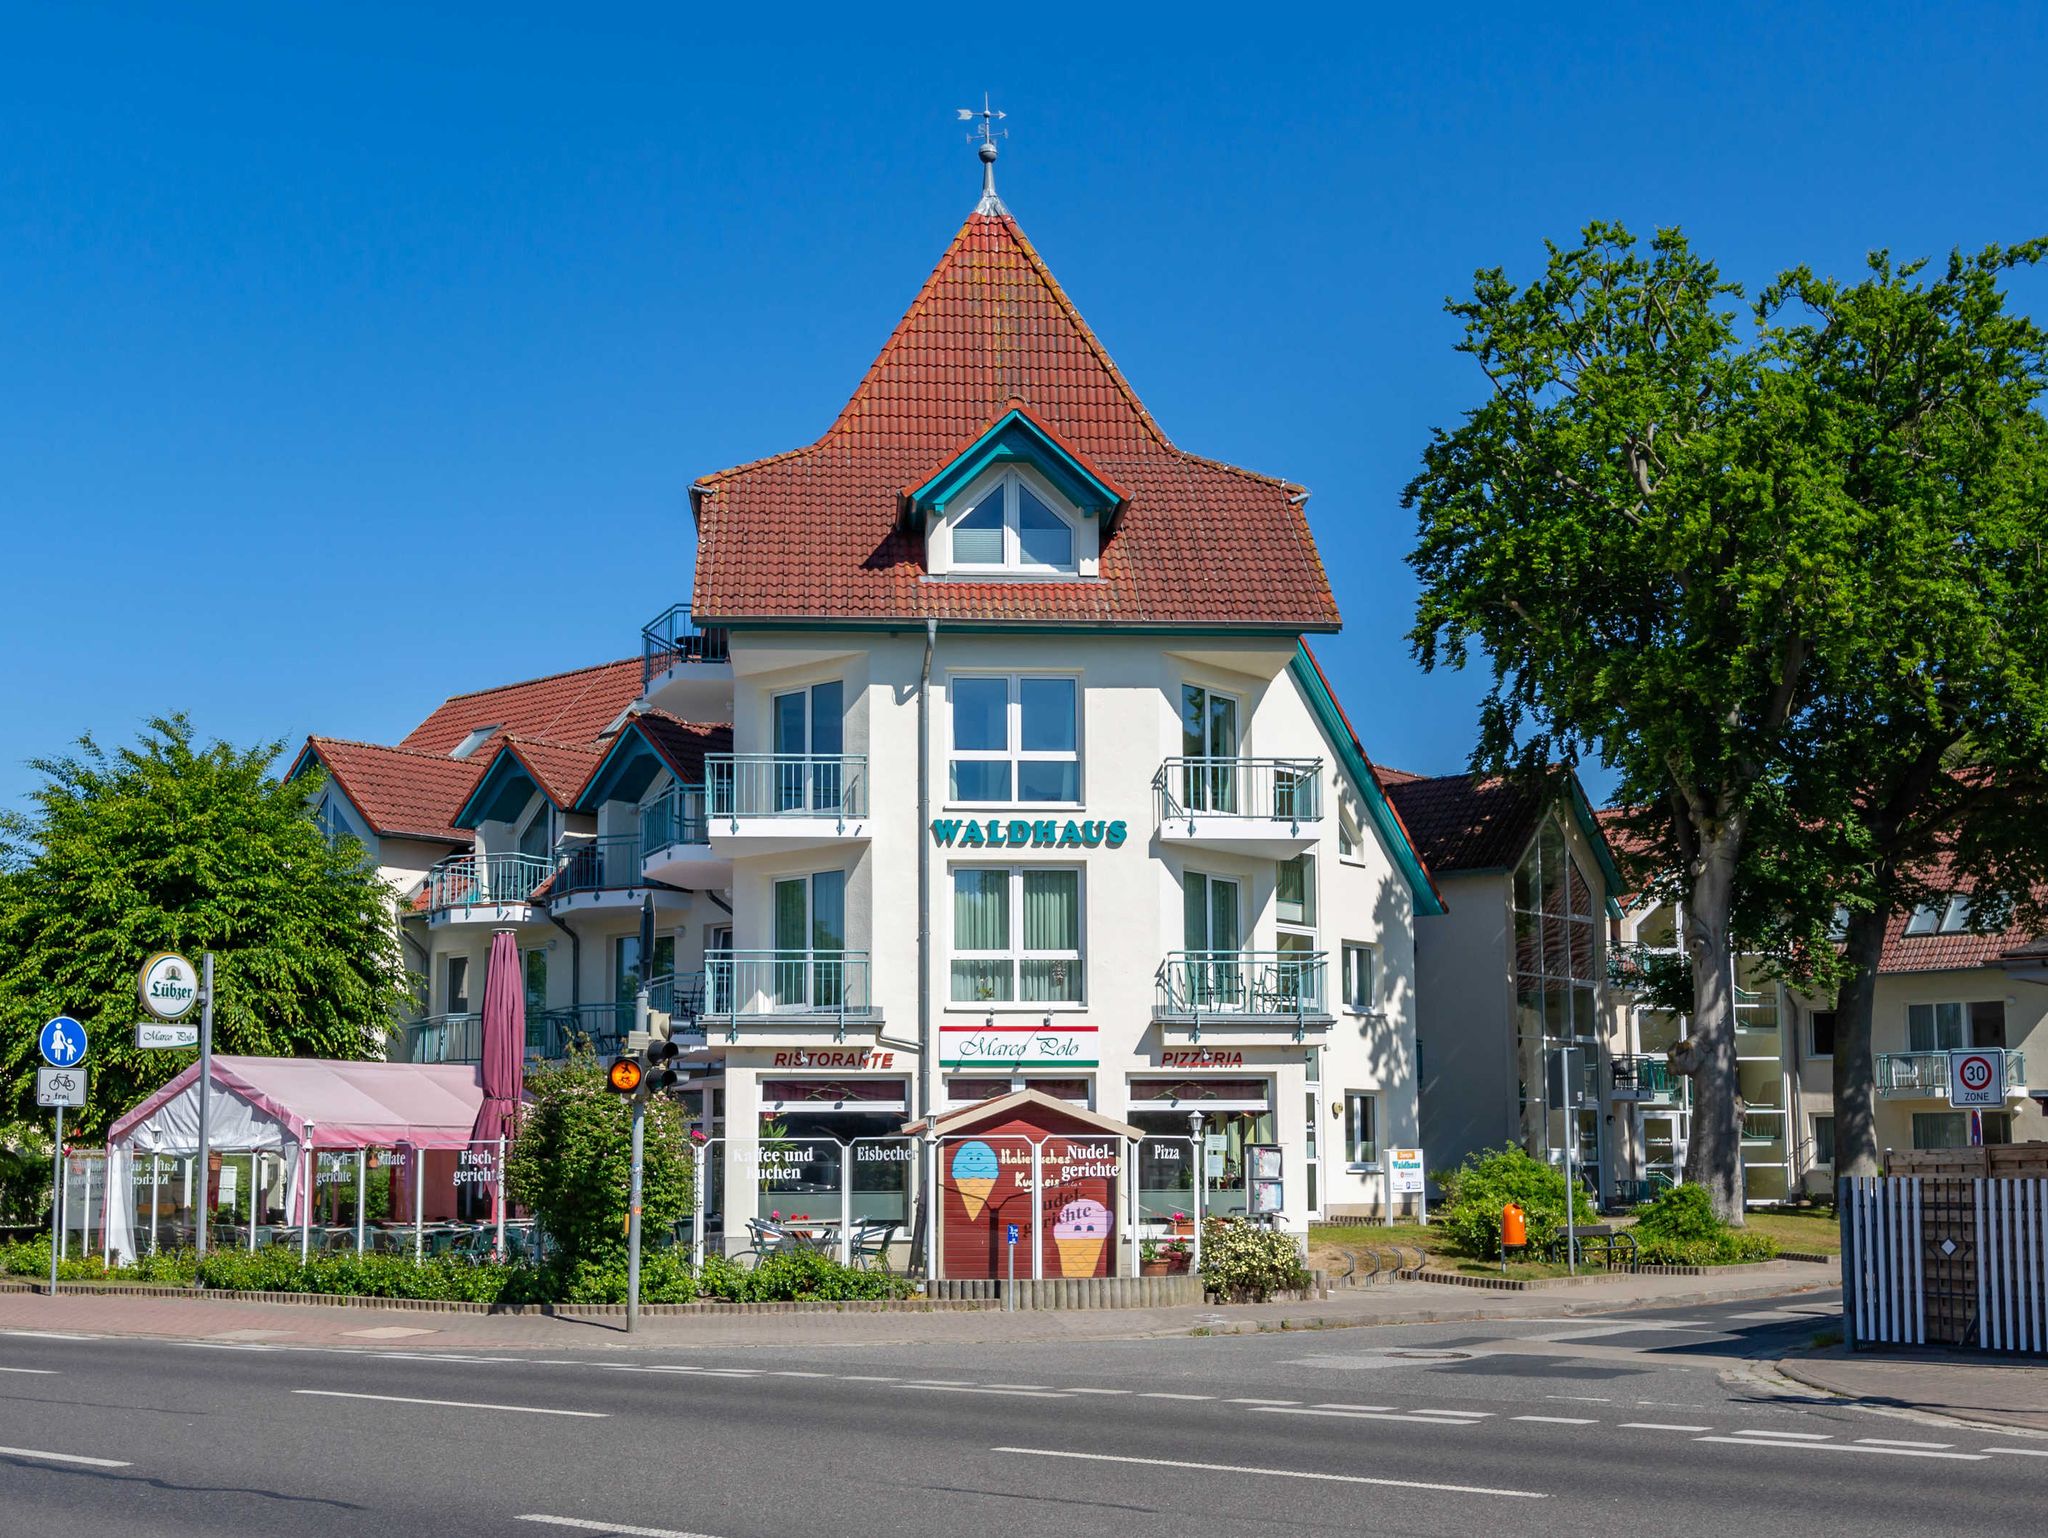 Villa Waldblick